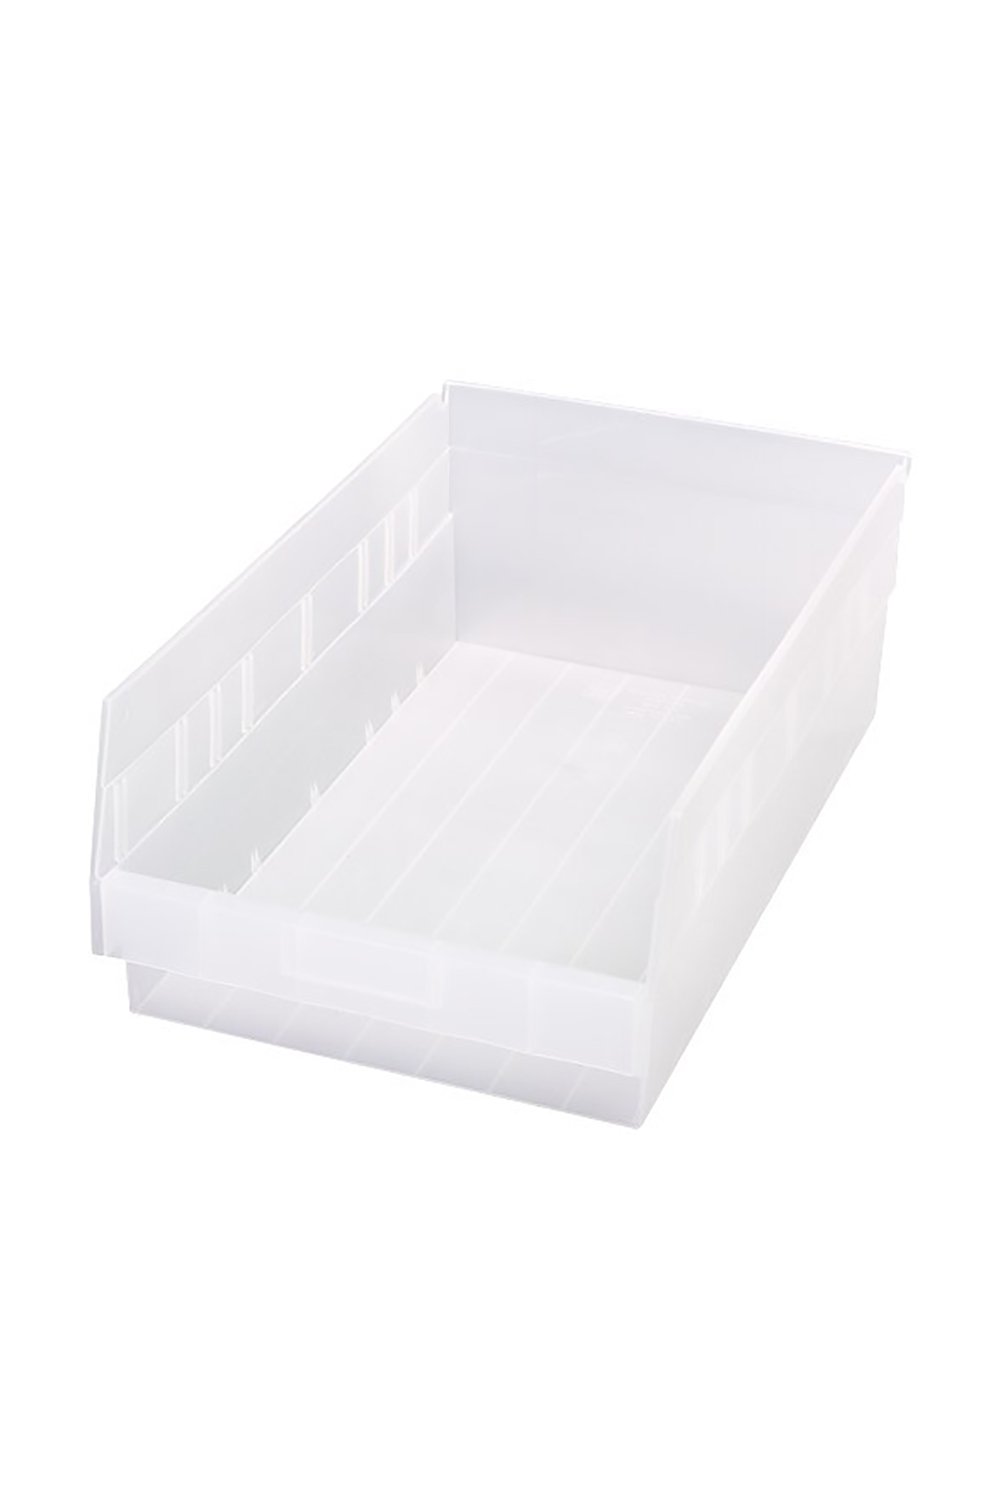 Shelf Bin for 24"D Shelves Bins & Containers Acart 17-7/8" x 11-1/8" x 6" Clear 